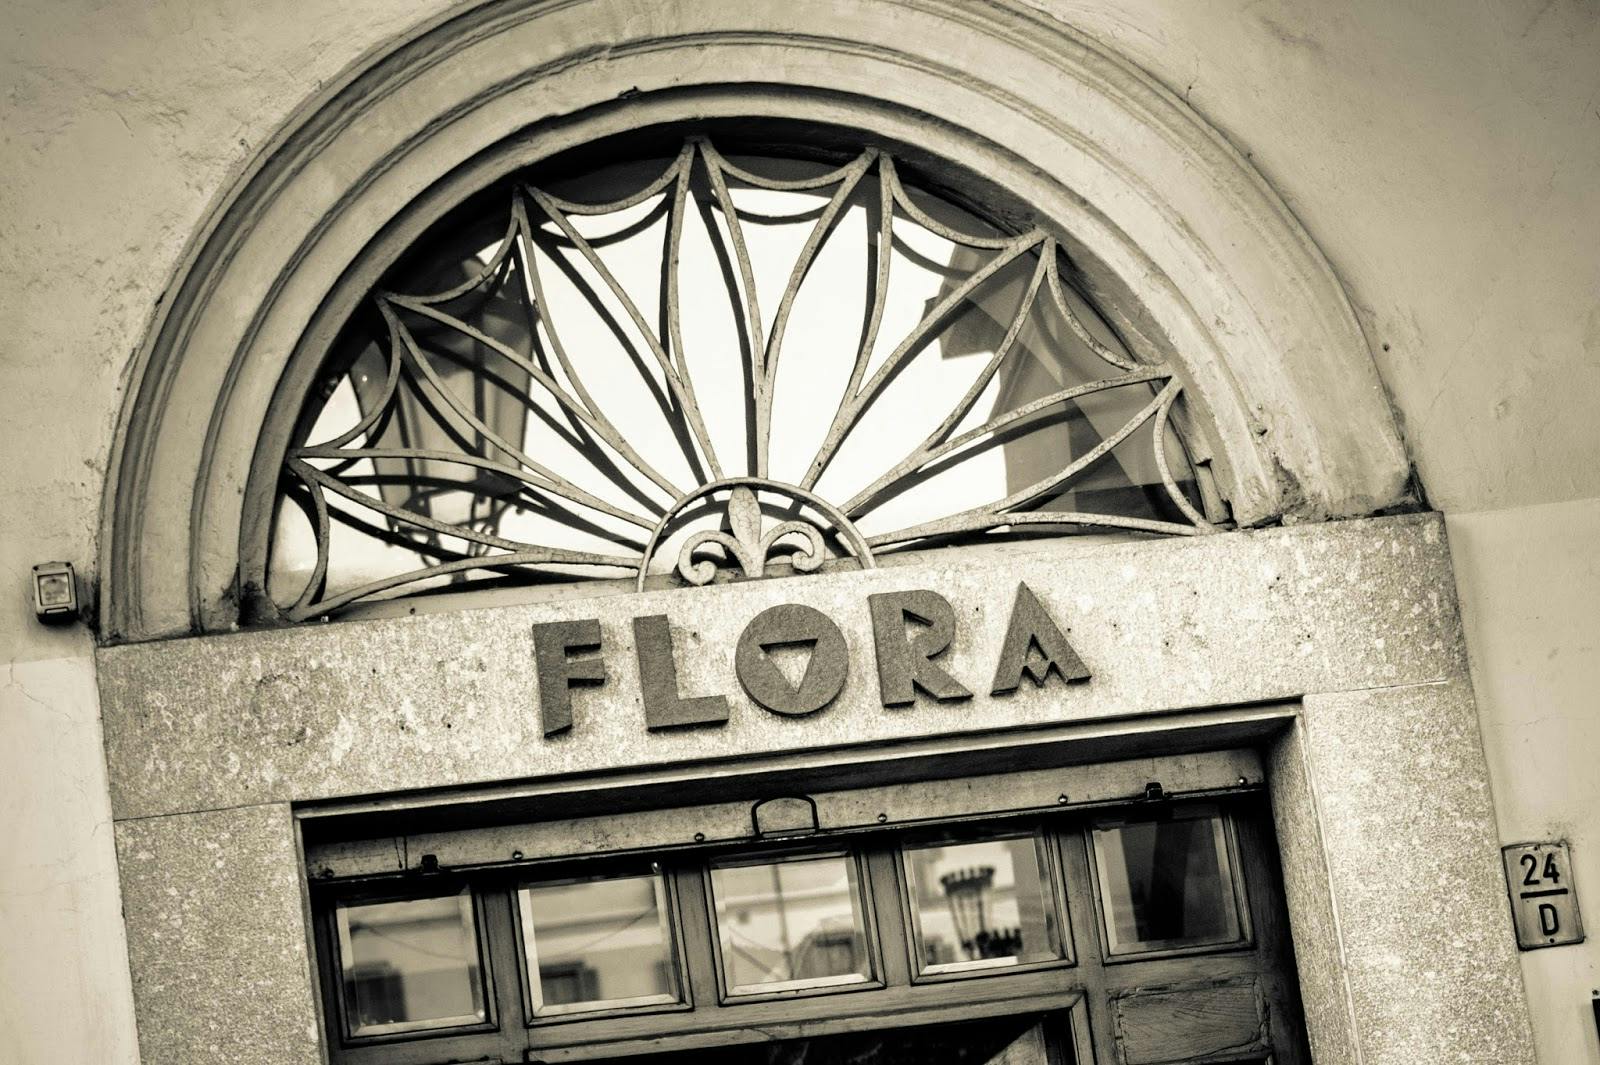 Image - Flora